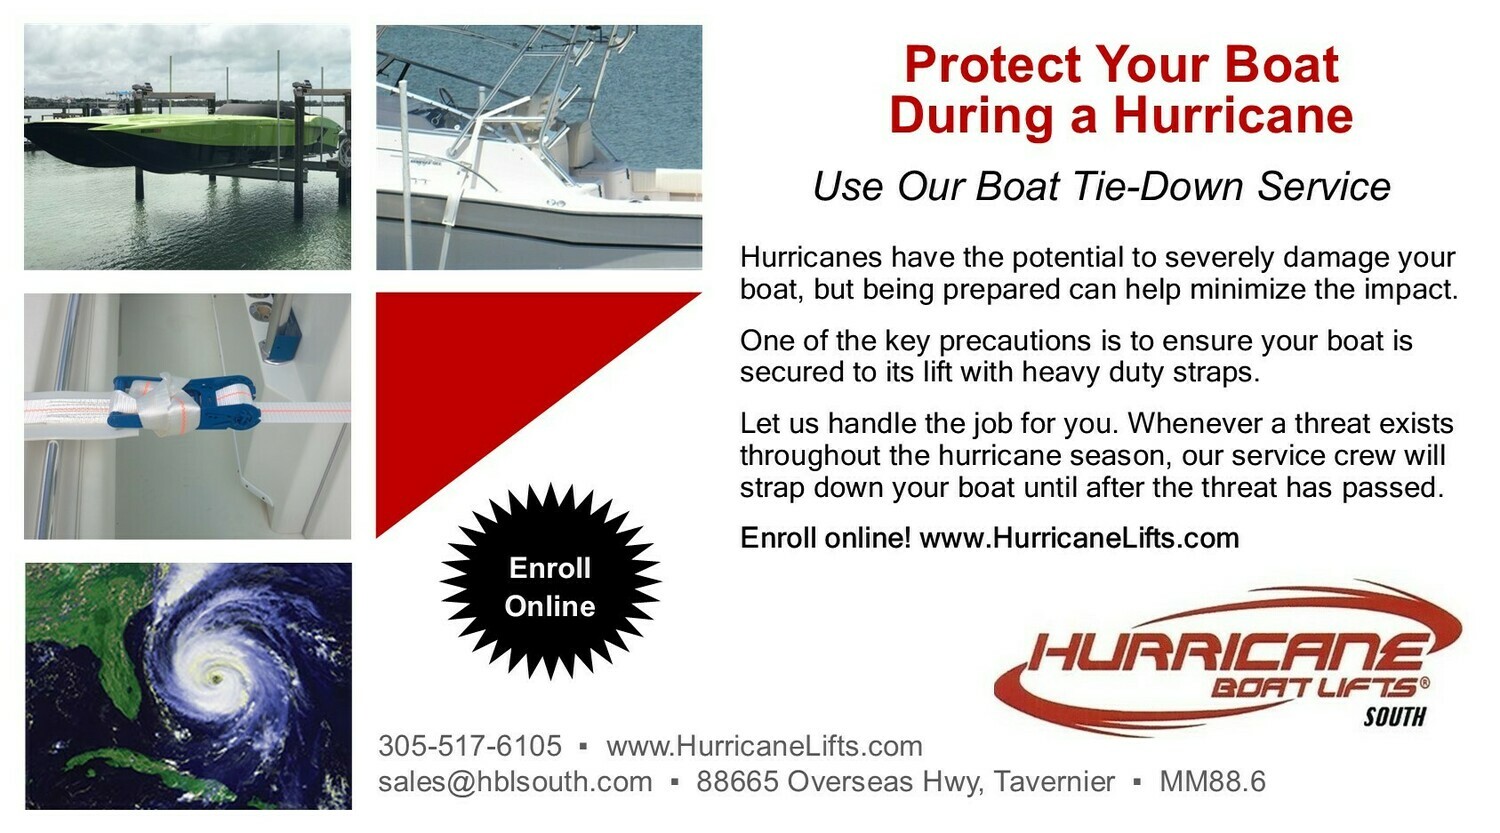 Hurricane Boat Lift Tie-Down Service - $299.00